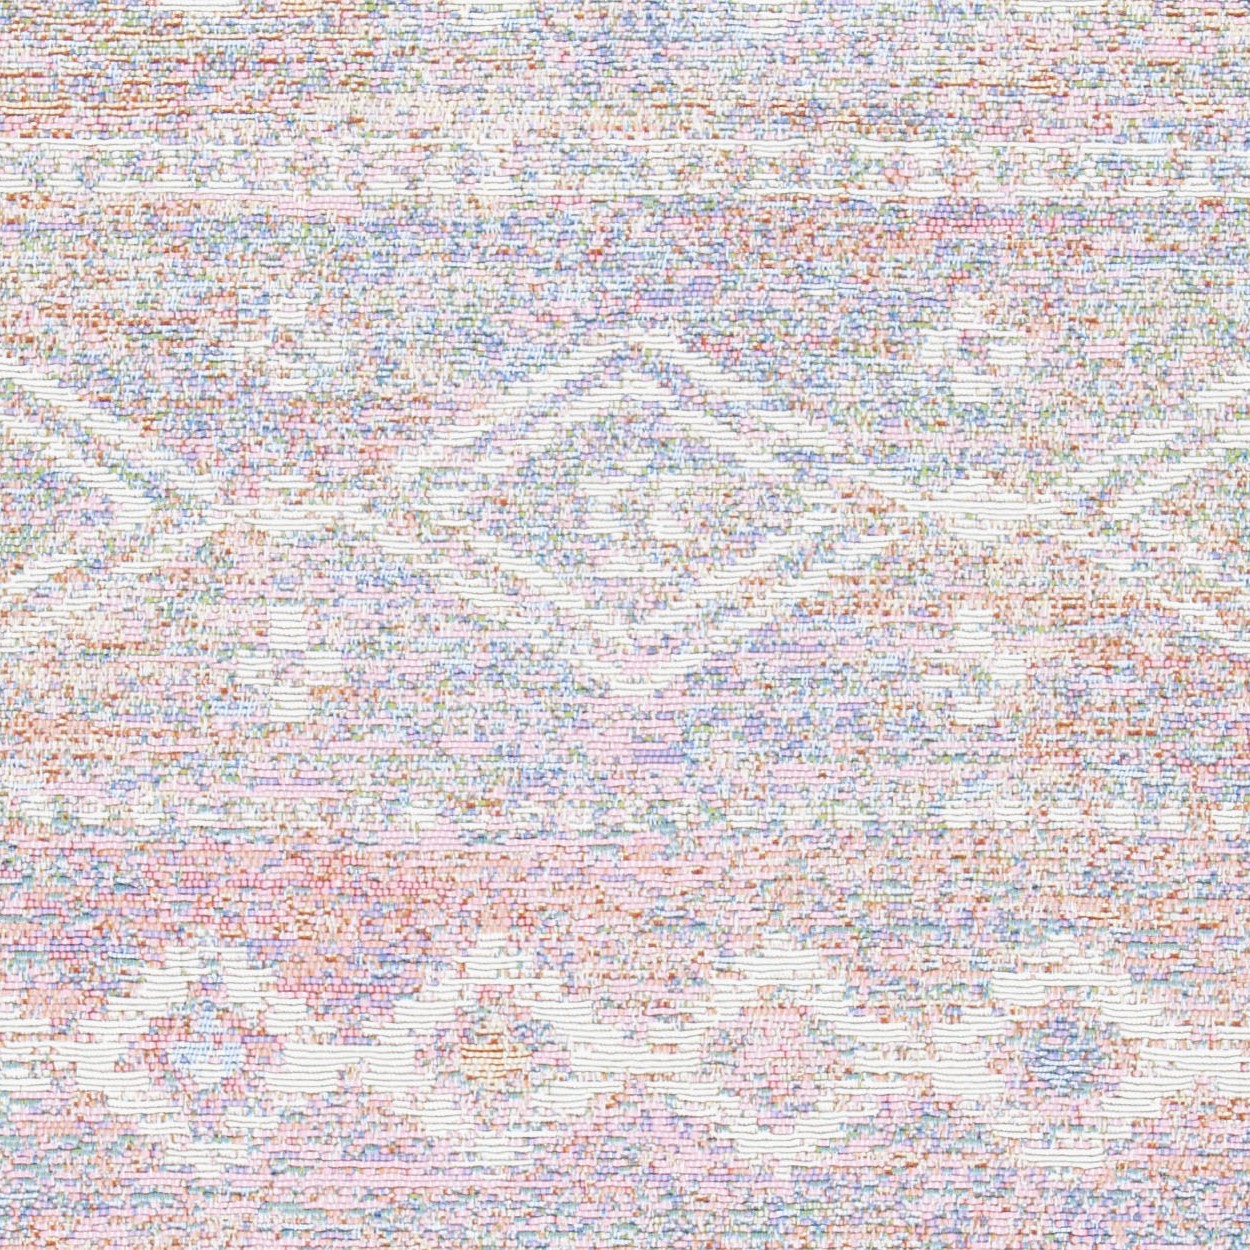 Safavieh Summer Zoja Outdoor Geometric Distressed Area Rug, Ivory/Pink, 5'3" x 7'6" - image 5 of 6